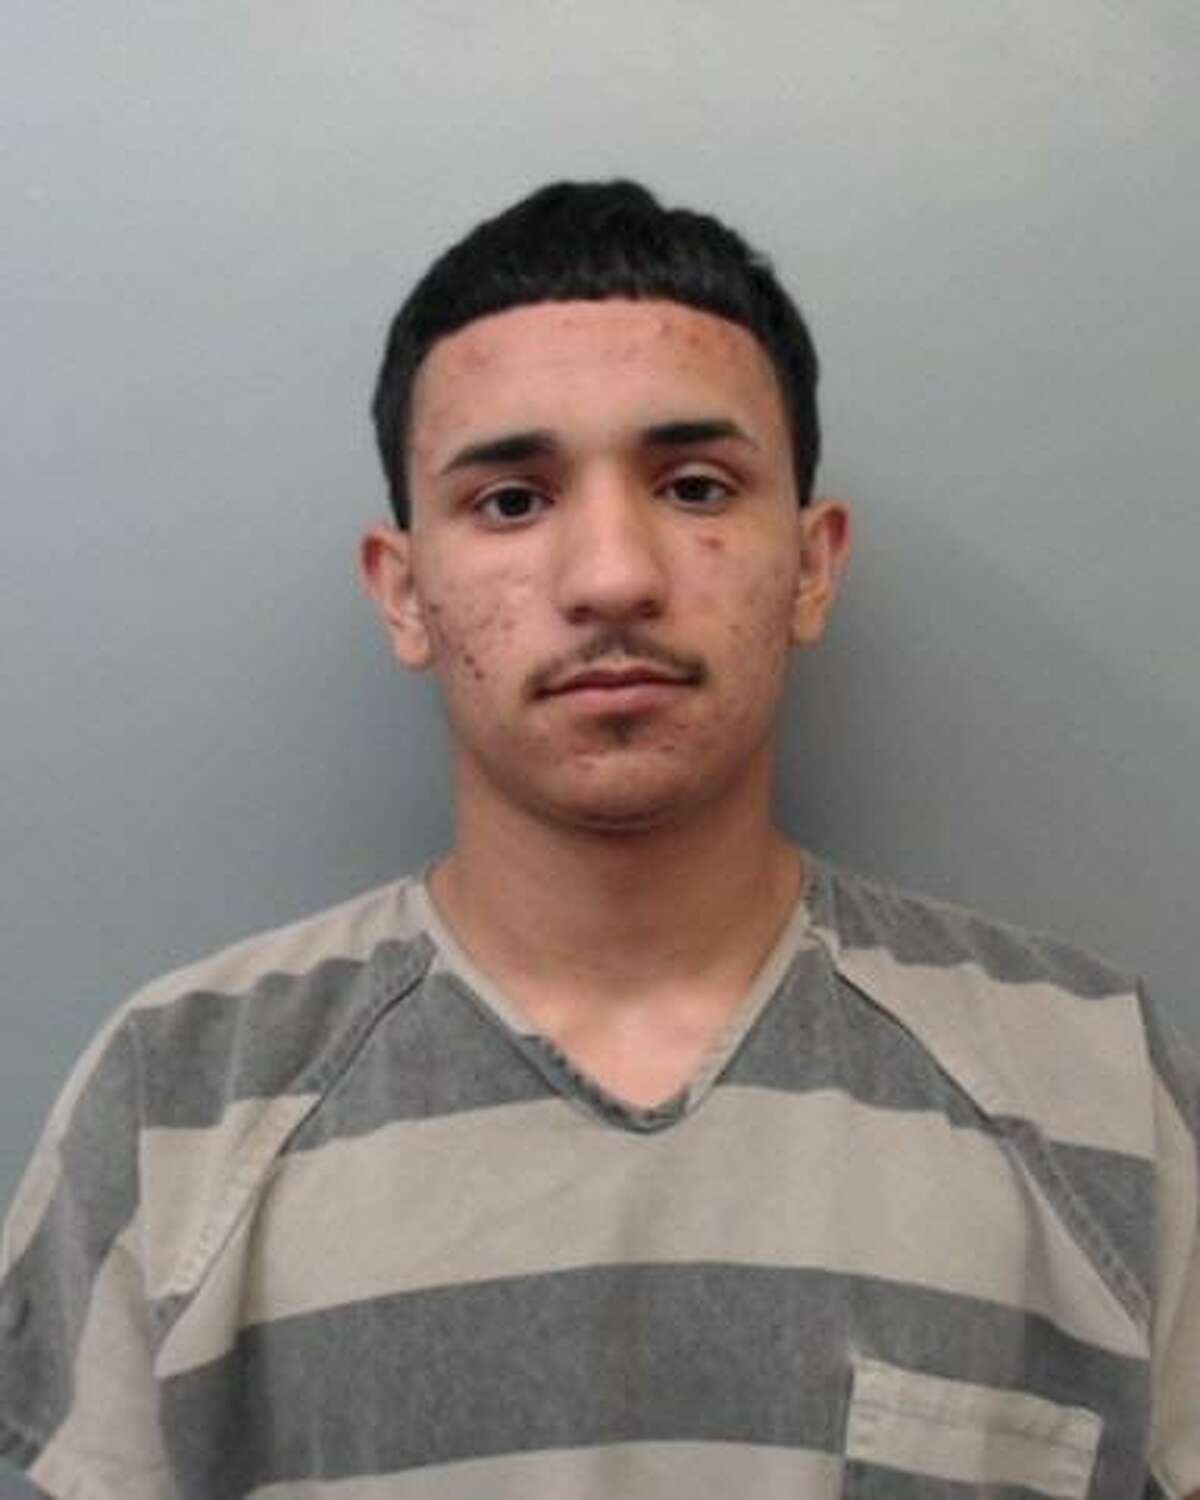 Carlos Daniel Rodriguez ,18, is facing multiple counts of criminal mischief.